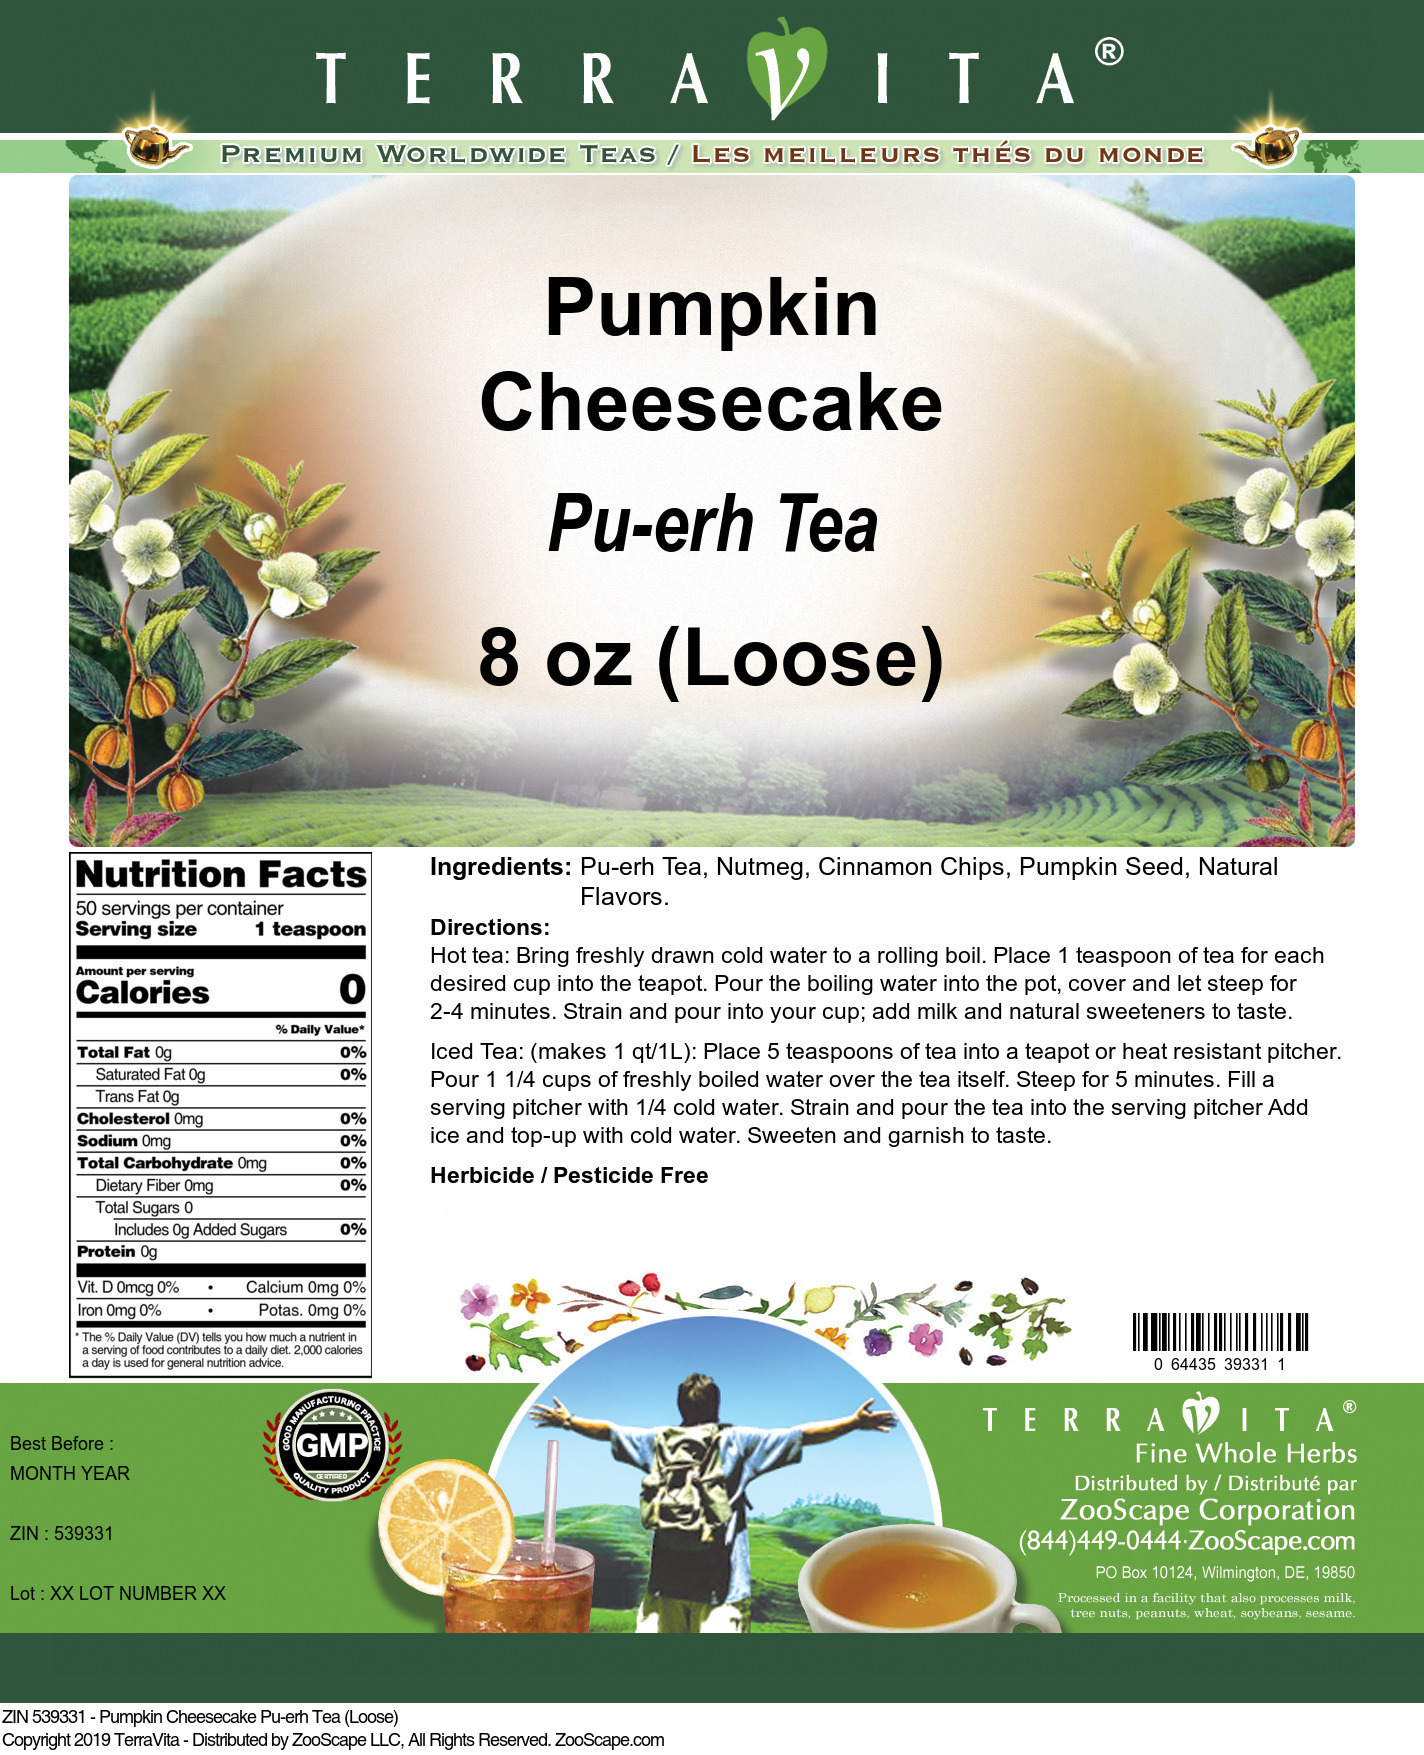 Pumpkin Cheesecake Pu-erh Tea (Loose) - Label